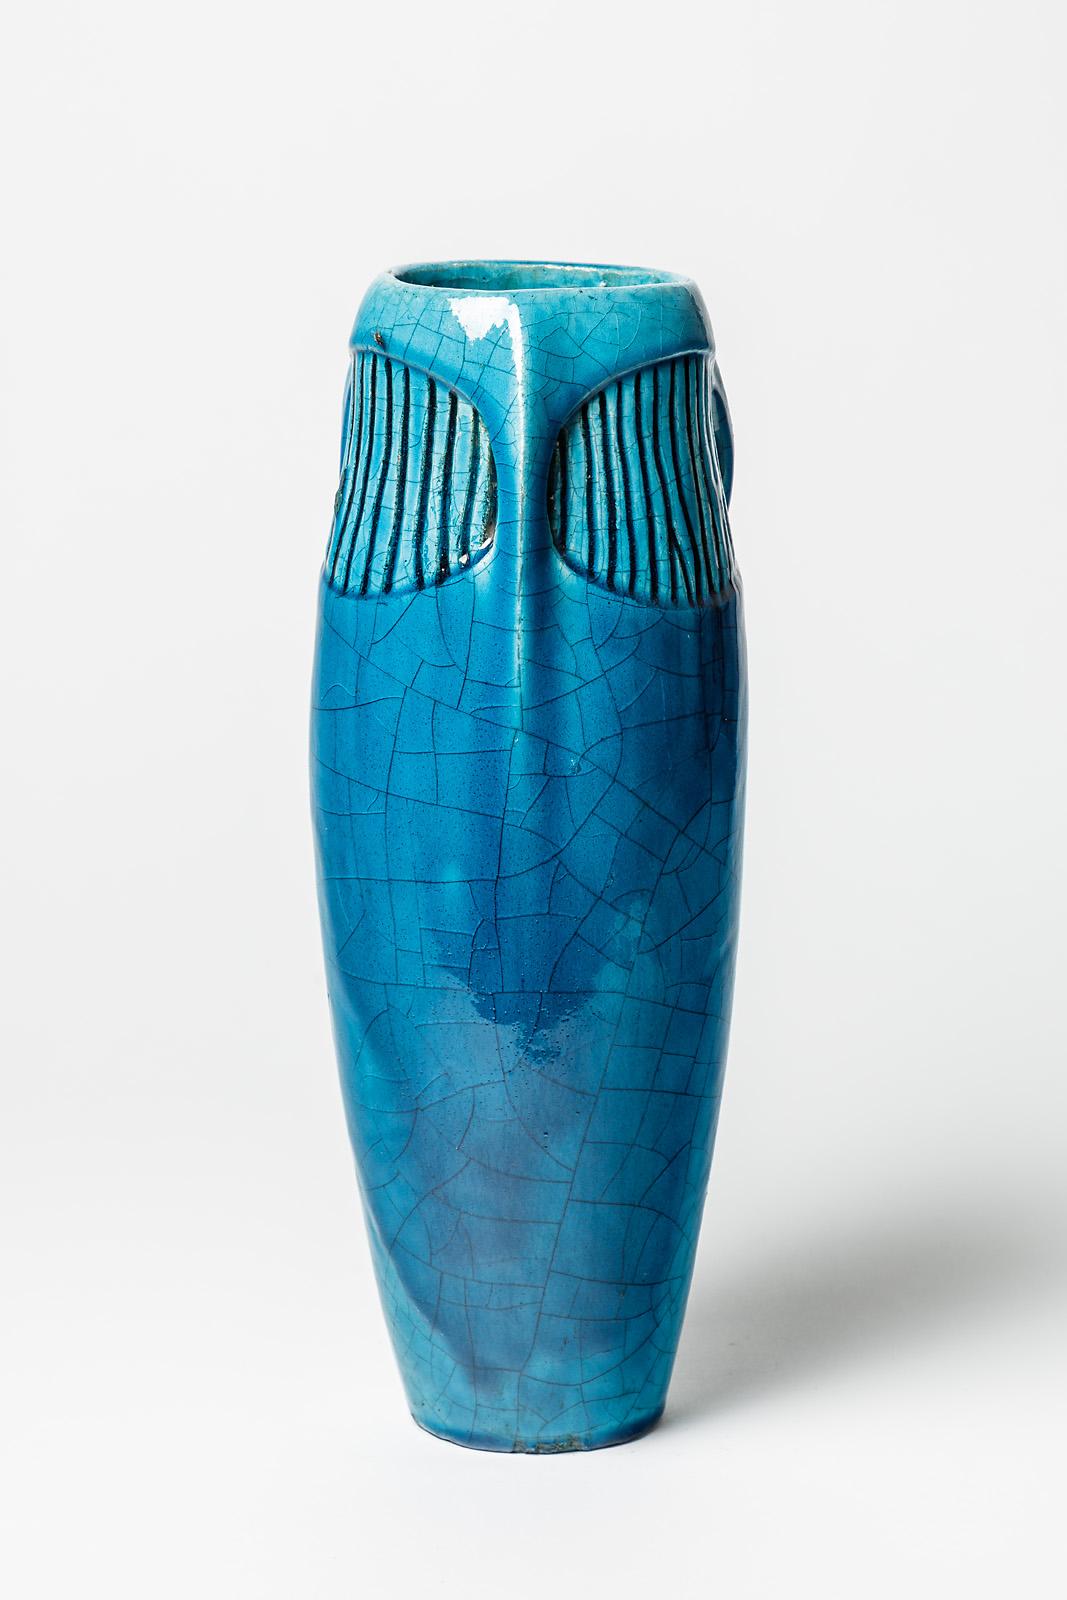 Edmond Lachenal (1855-1948)

Elegant large blue art deco period ceramic vase

Original 20th century design

Realised circa 1920

Original good conditions

Elegant blue ceramic glaze color

Signed under the base

Height : 37 cm Large :